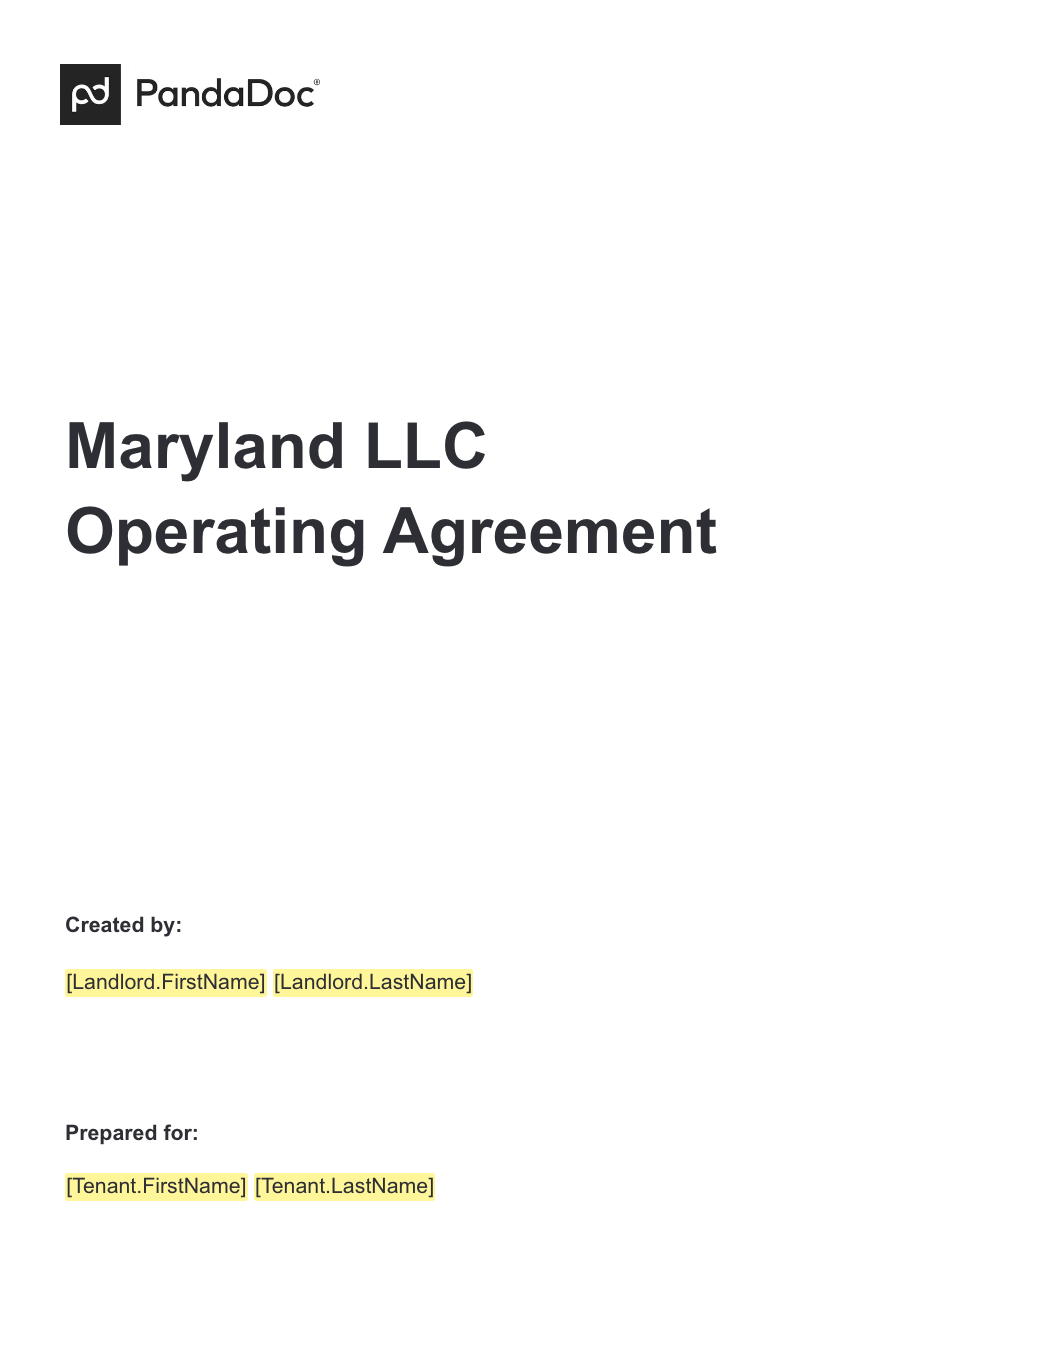 Maryland LLC Operating Agreement 